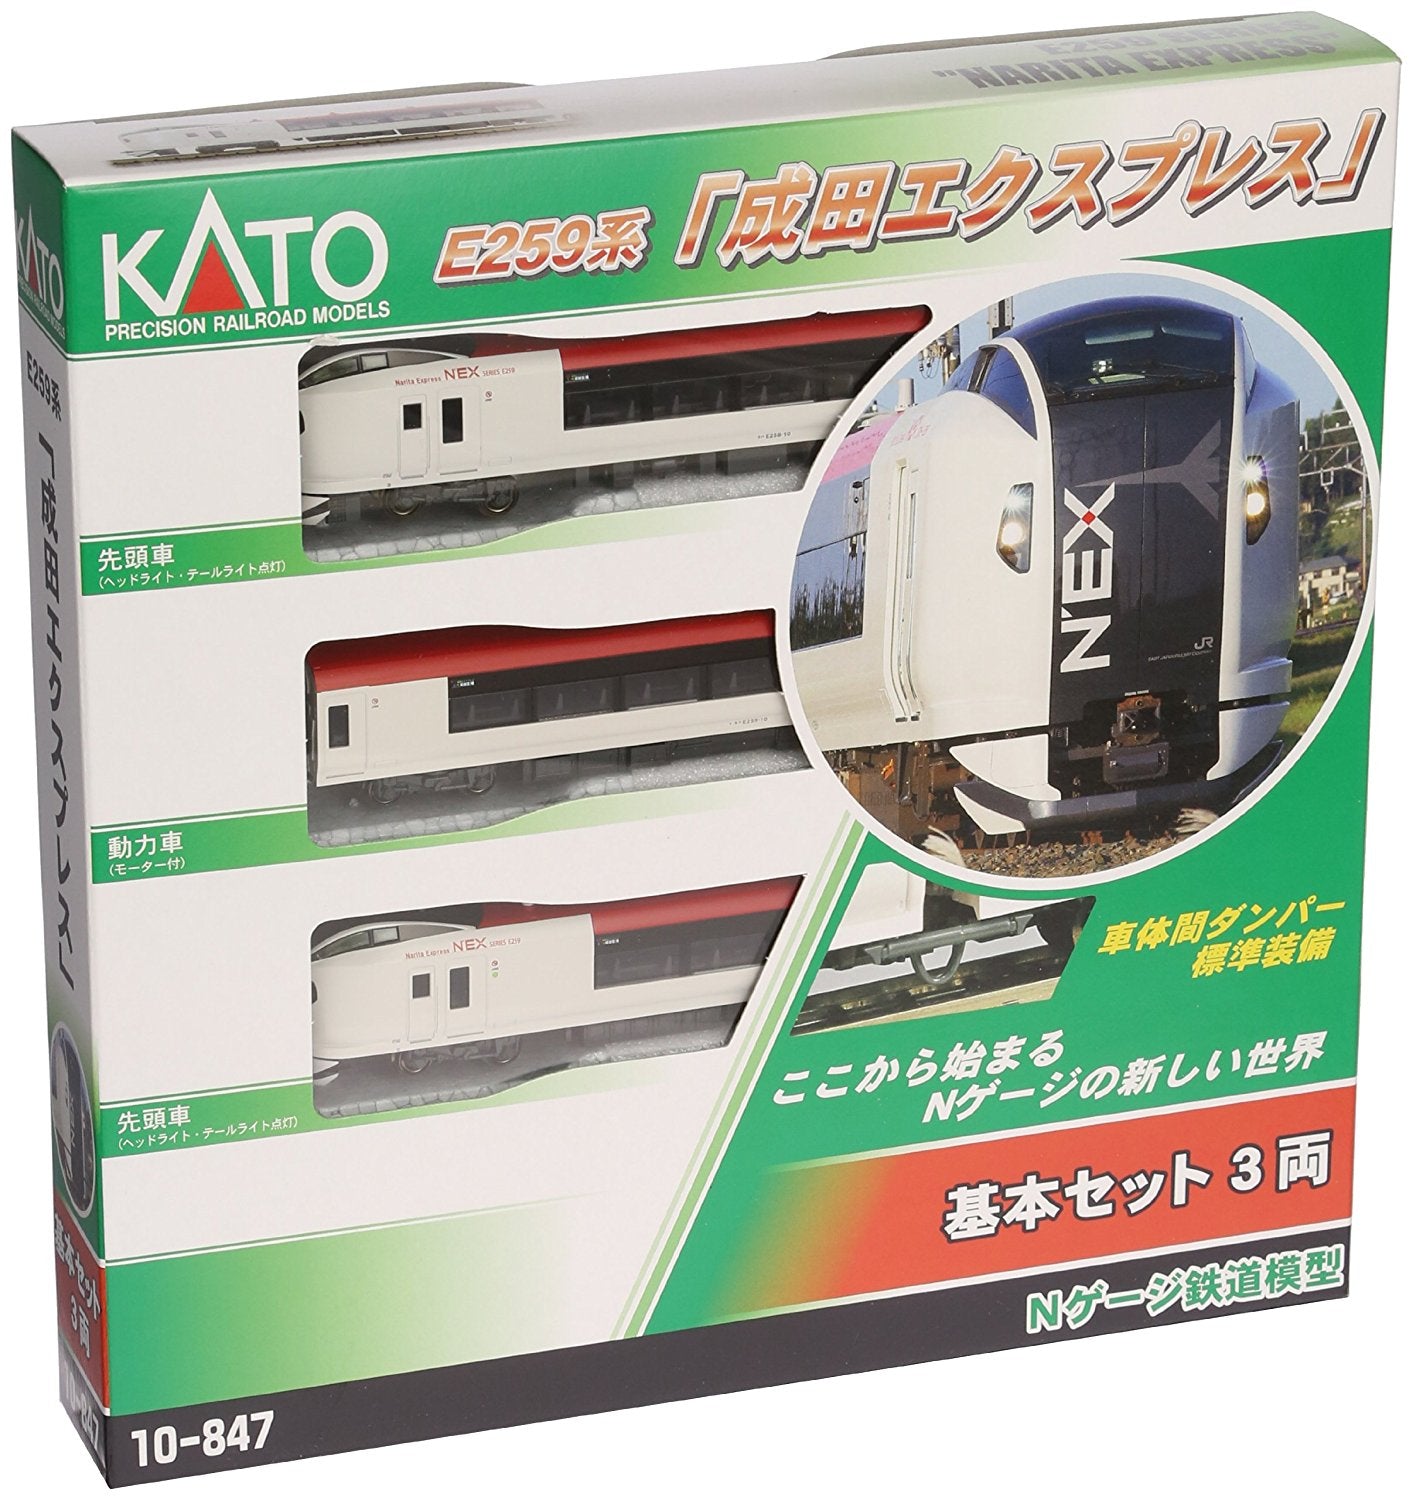 10-847 Series E259 Narita Express`Basic 3-Car Set